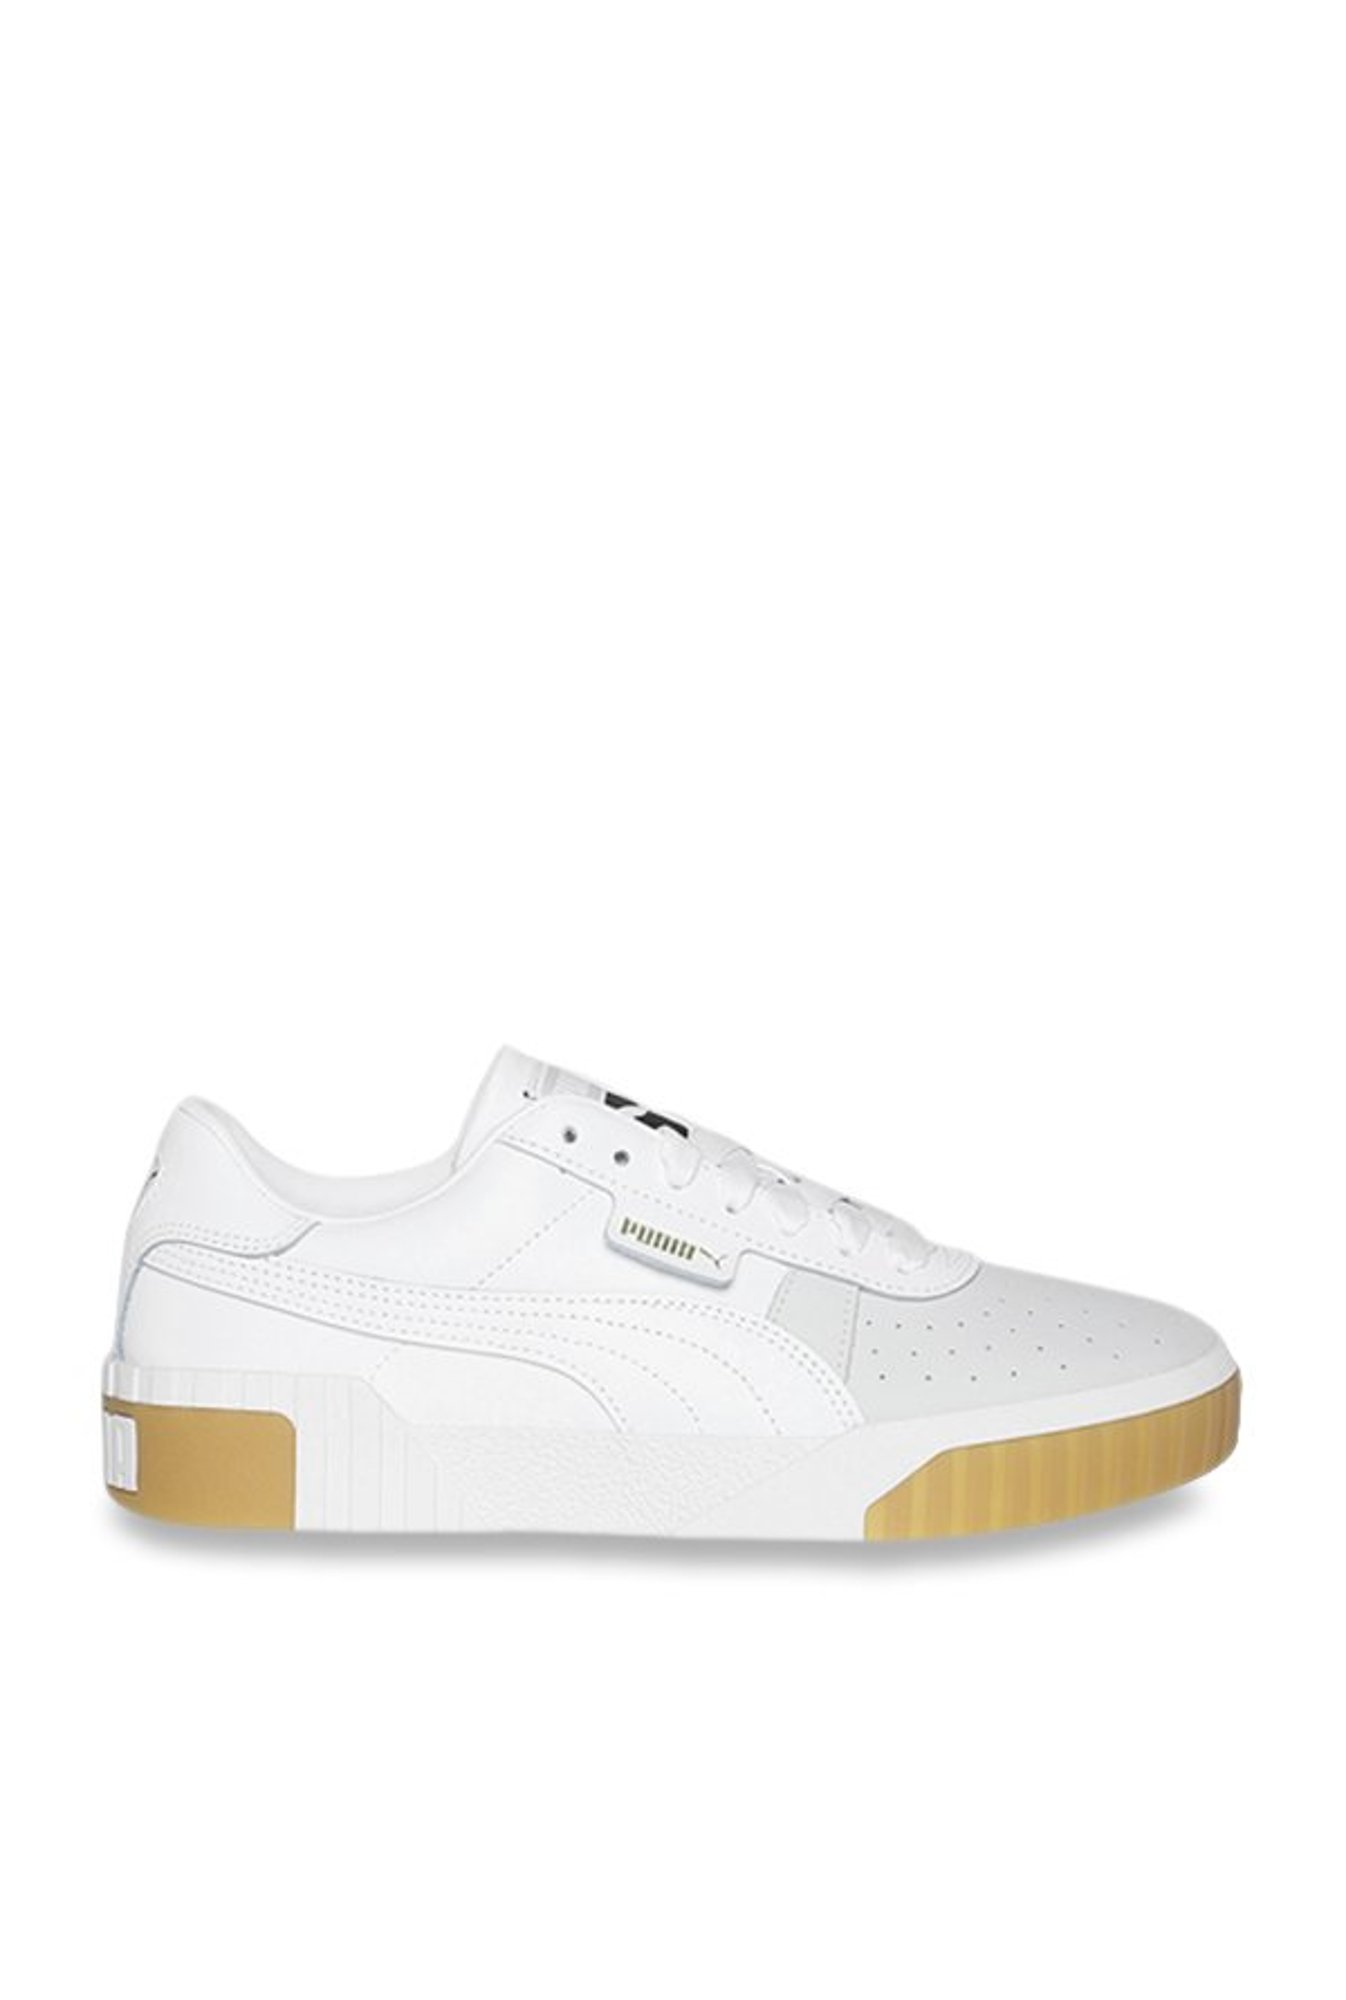 puma cali exotic sneakers in white